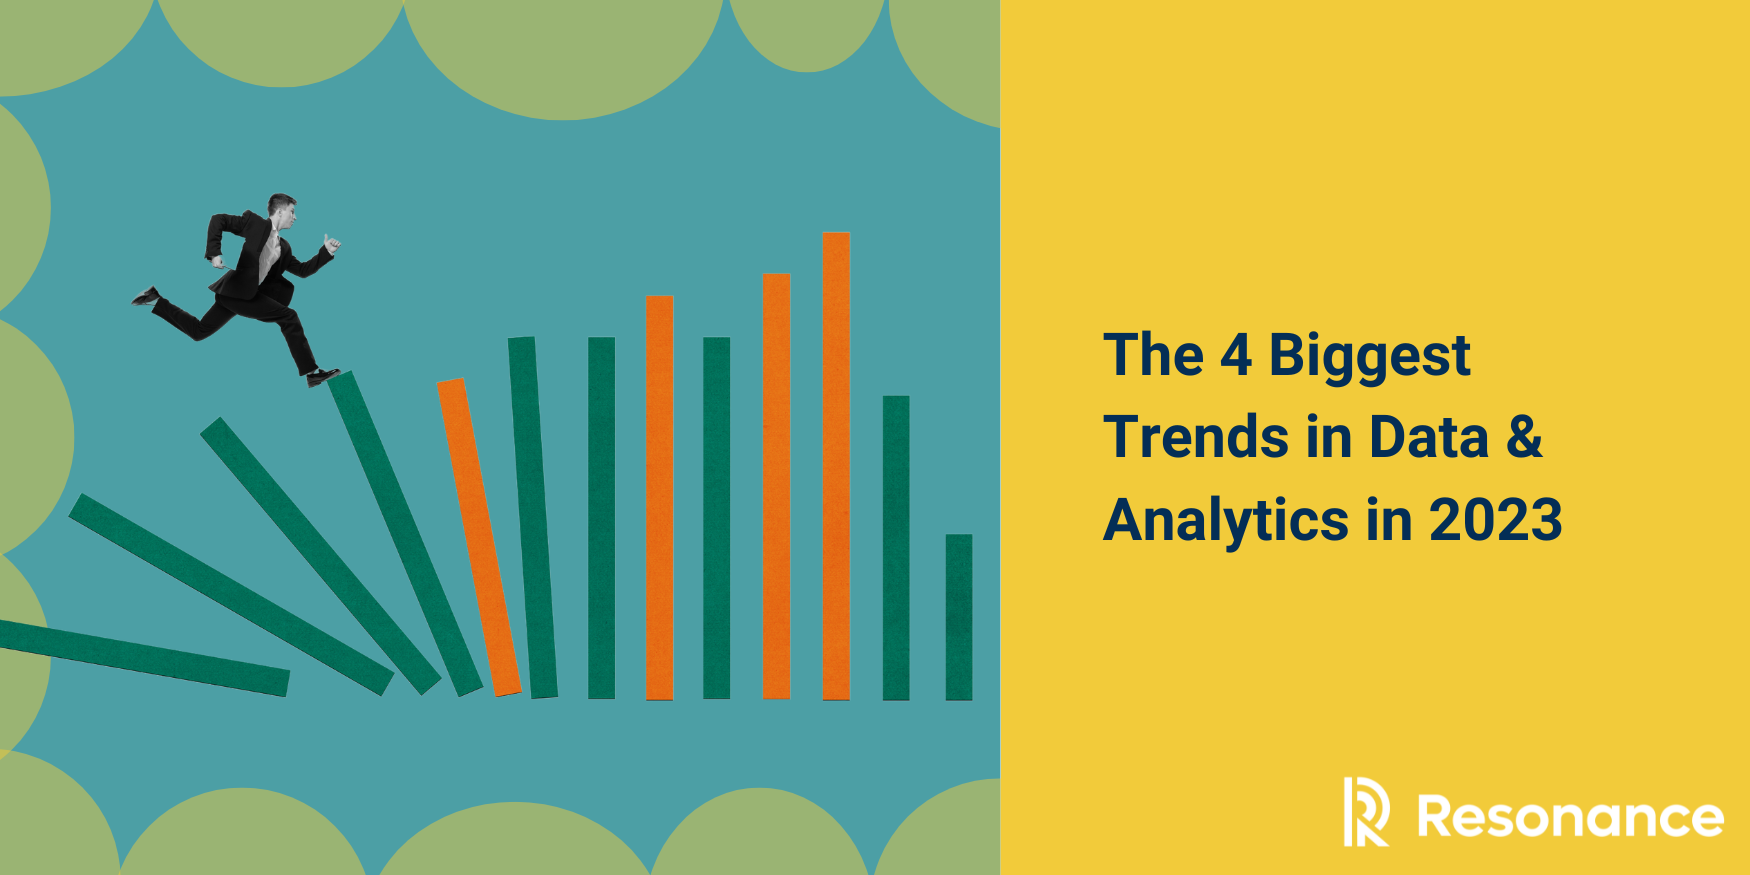 The 4 Biggest Trends in Data & Analytics in 2023